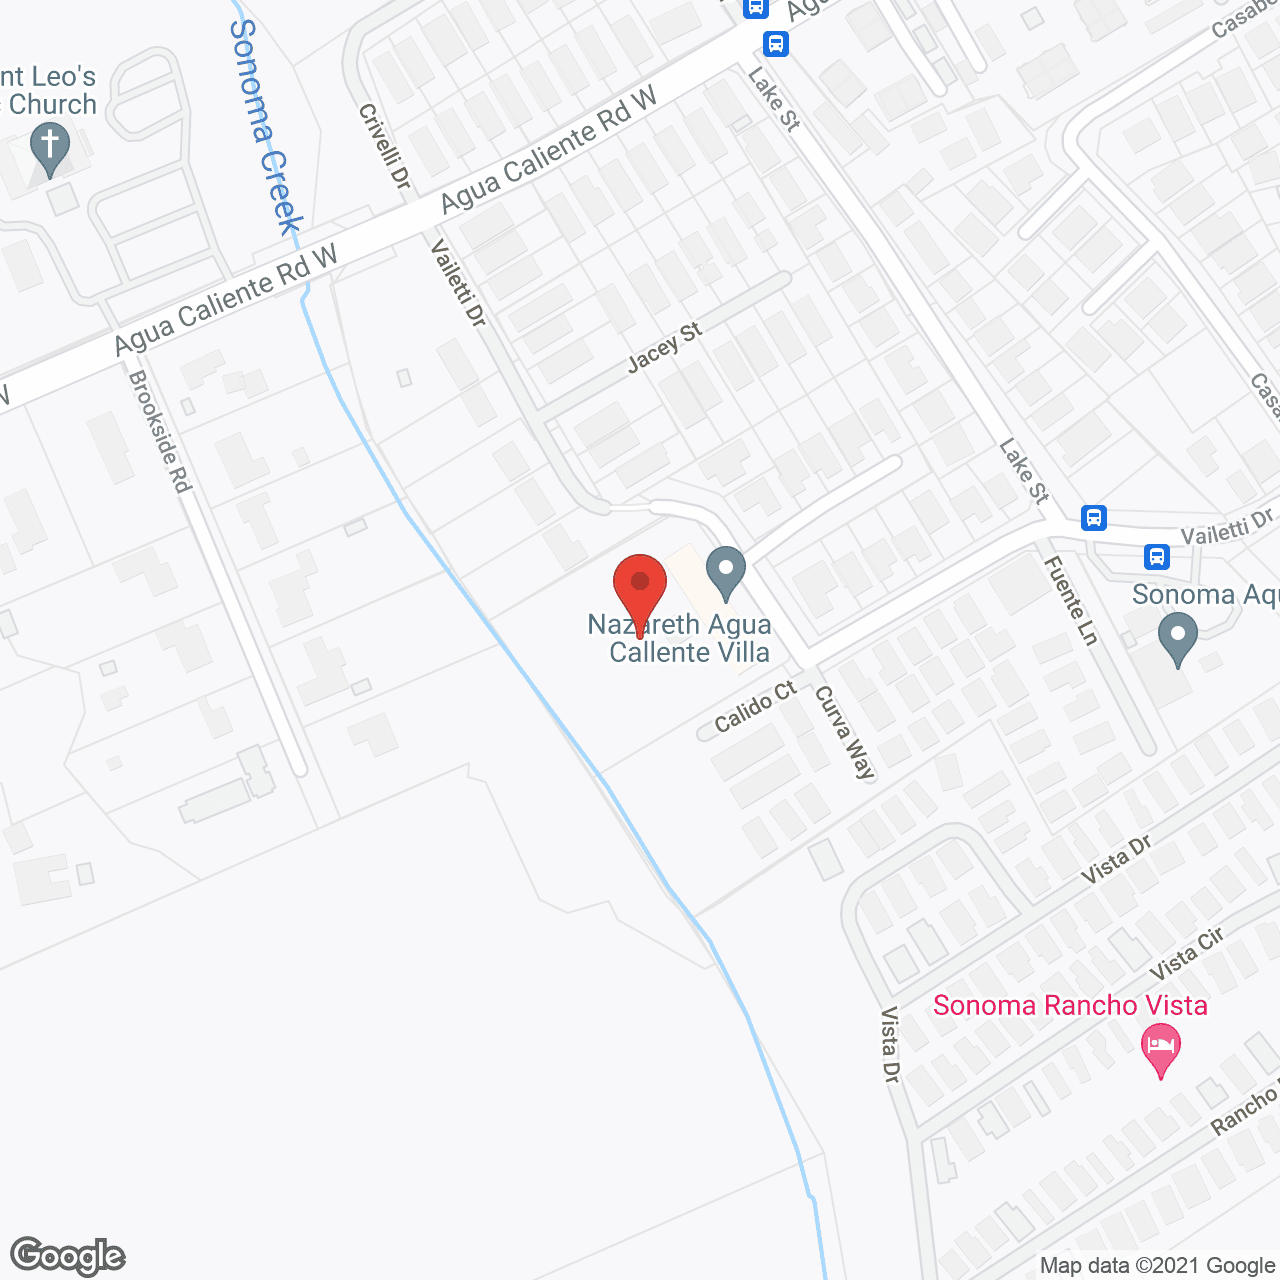 Nazareth Agua Caliente Villas in google map